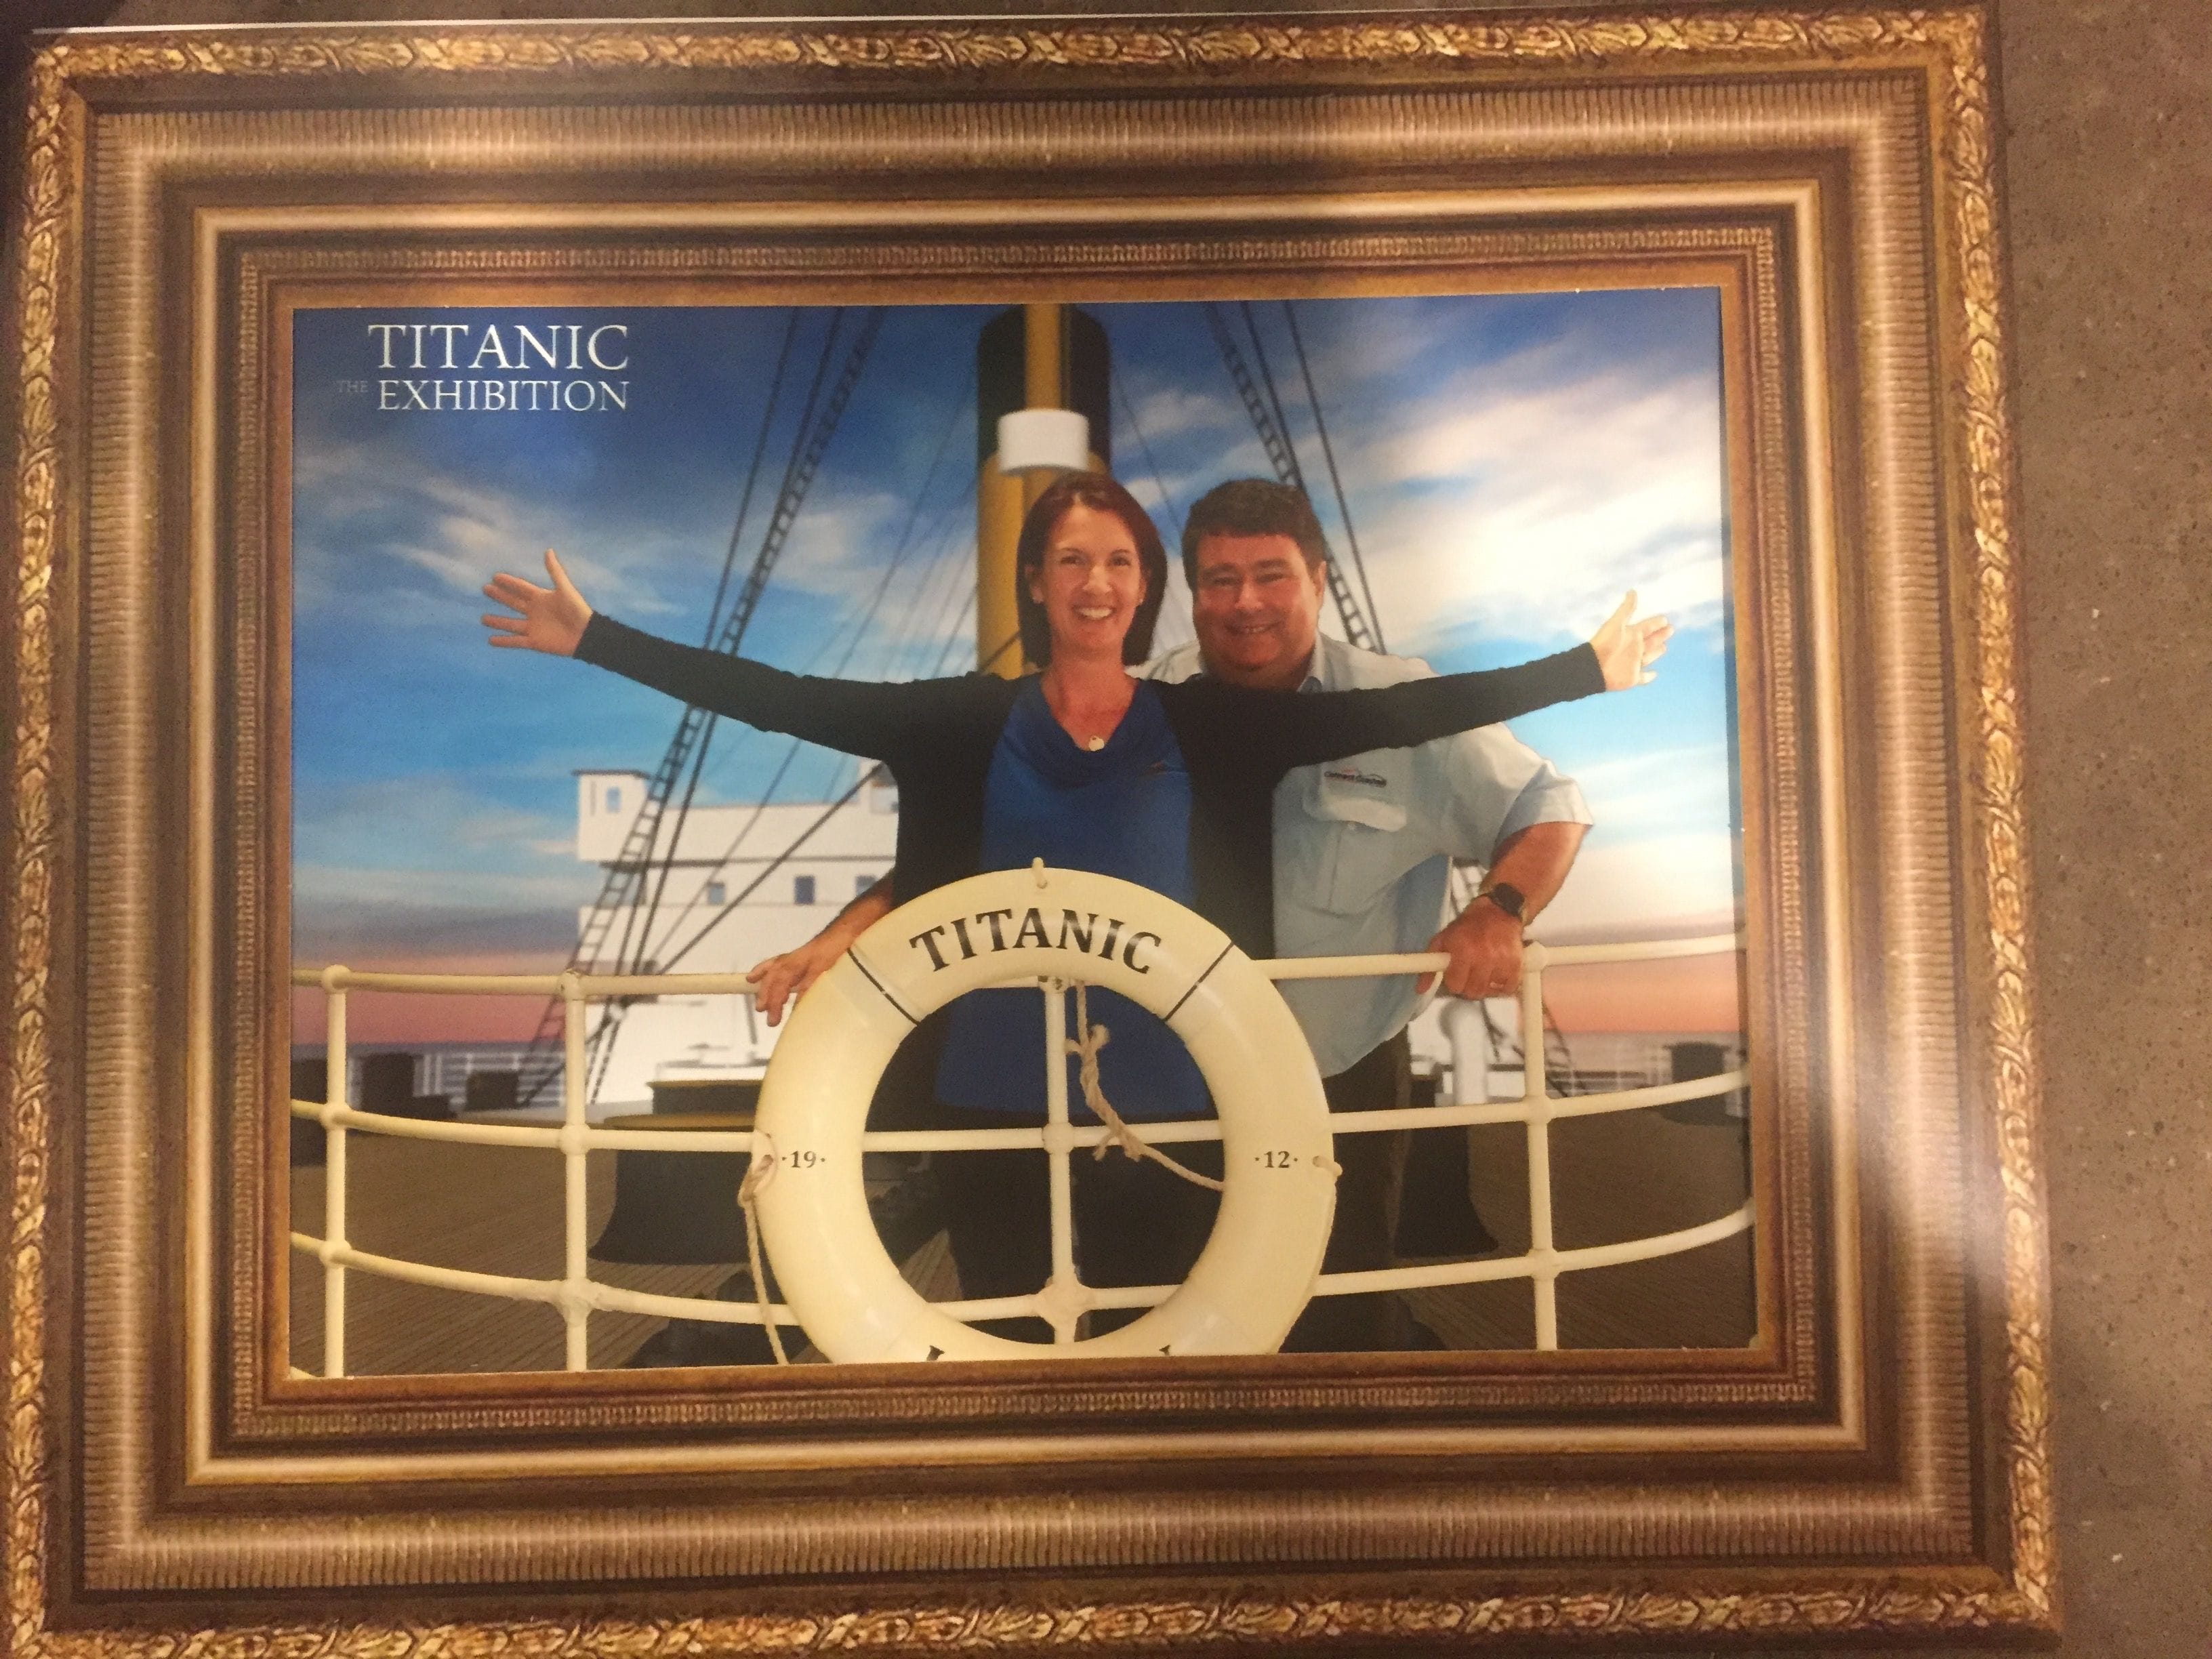 The Titanic Exhibition Image -594077f8a7bbe